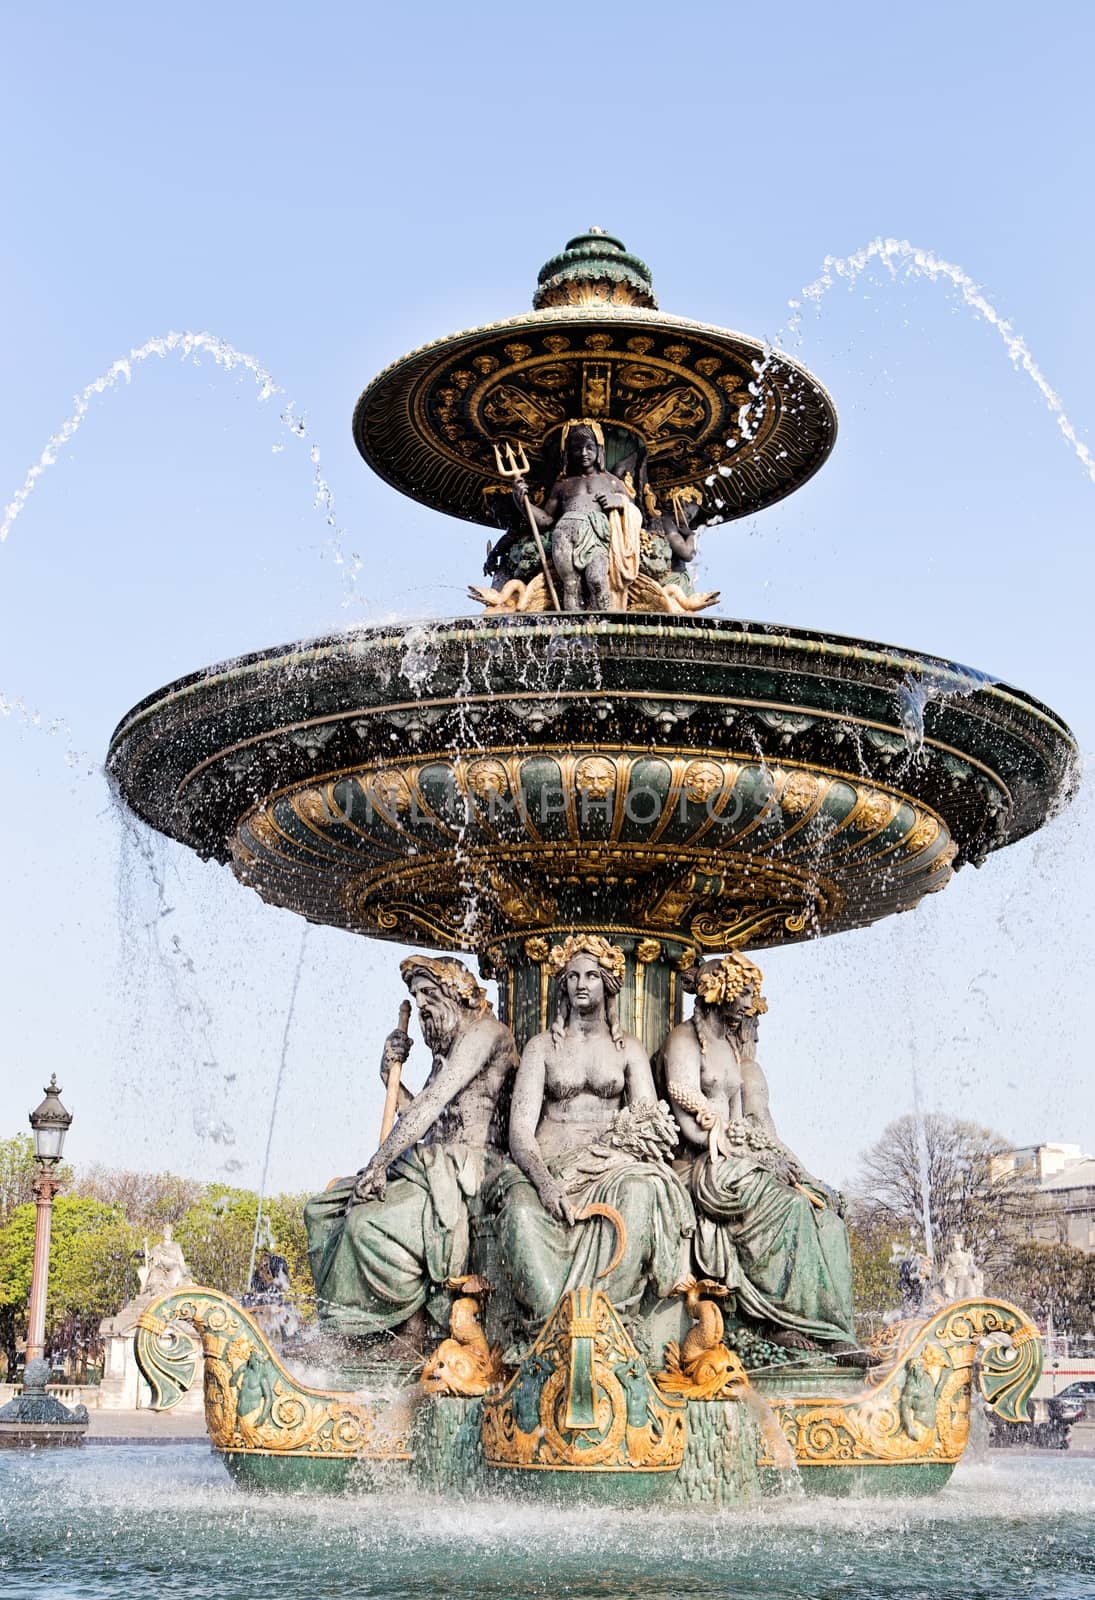 Beautiful fountain in a park in Paris